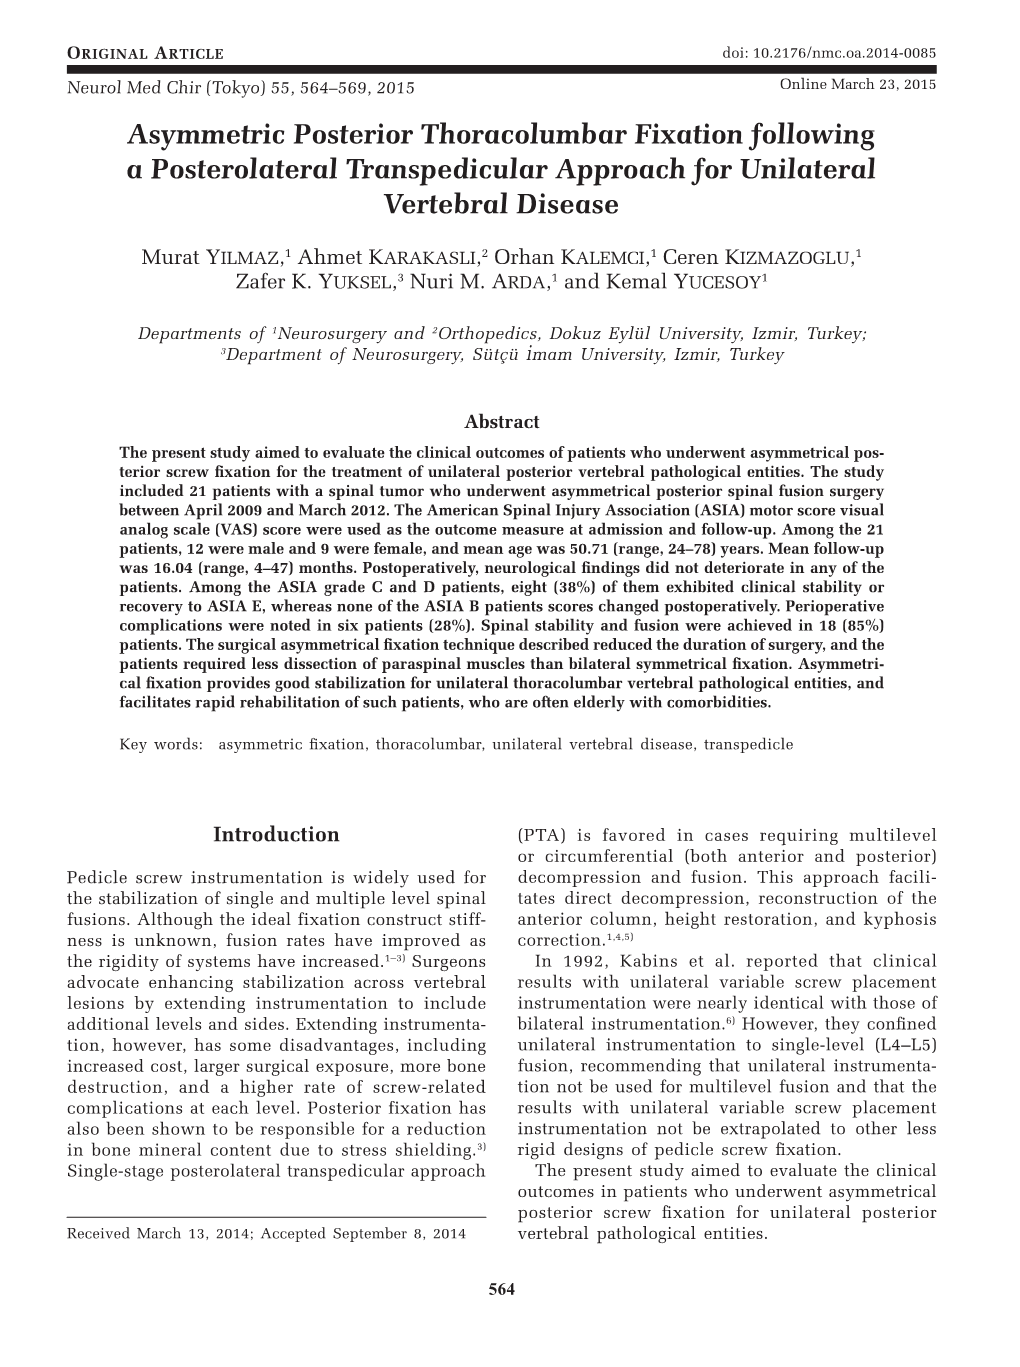 Asymmetric Posterior Thoracolumbar Fixation Following a Posterolateral Transpedicular Approach for Unilateral Vertebral Disease